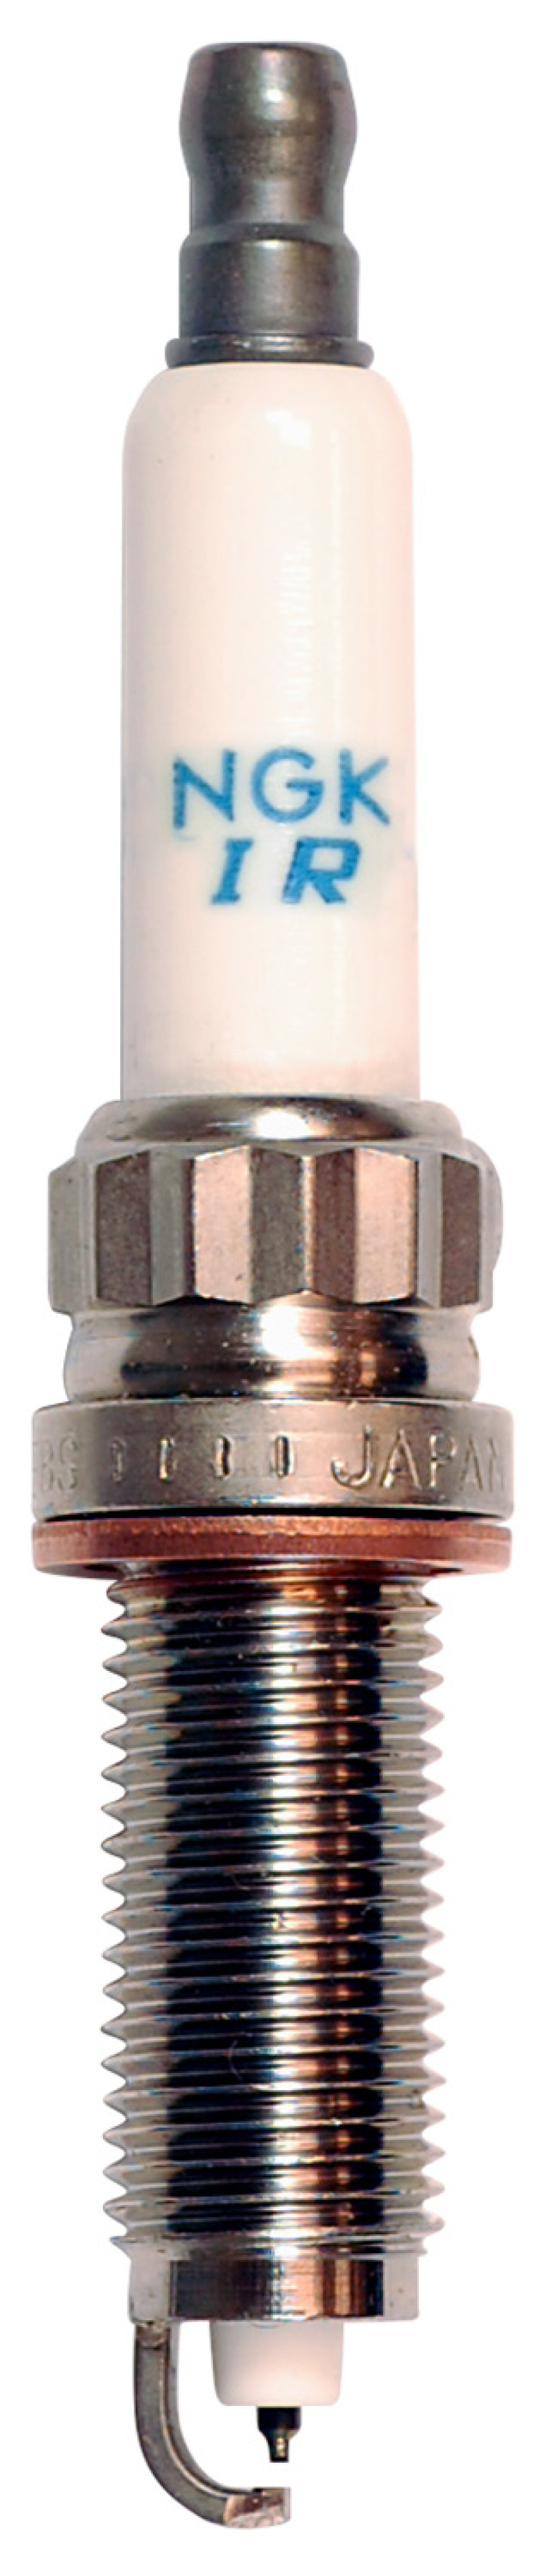 Laser Iridium Spark Plug (SILZKBR8D8S) - Click Image to Close